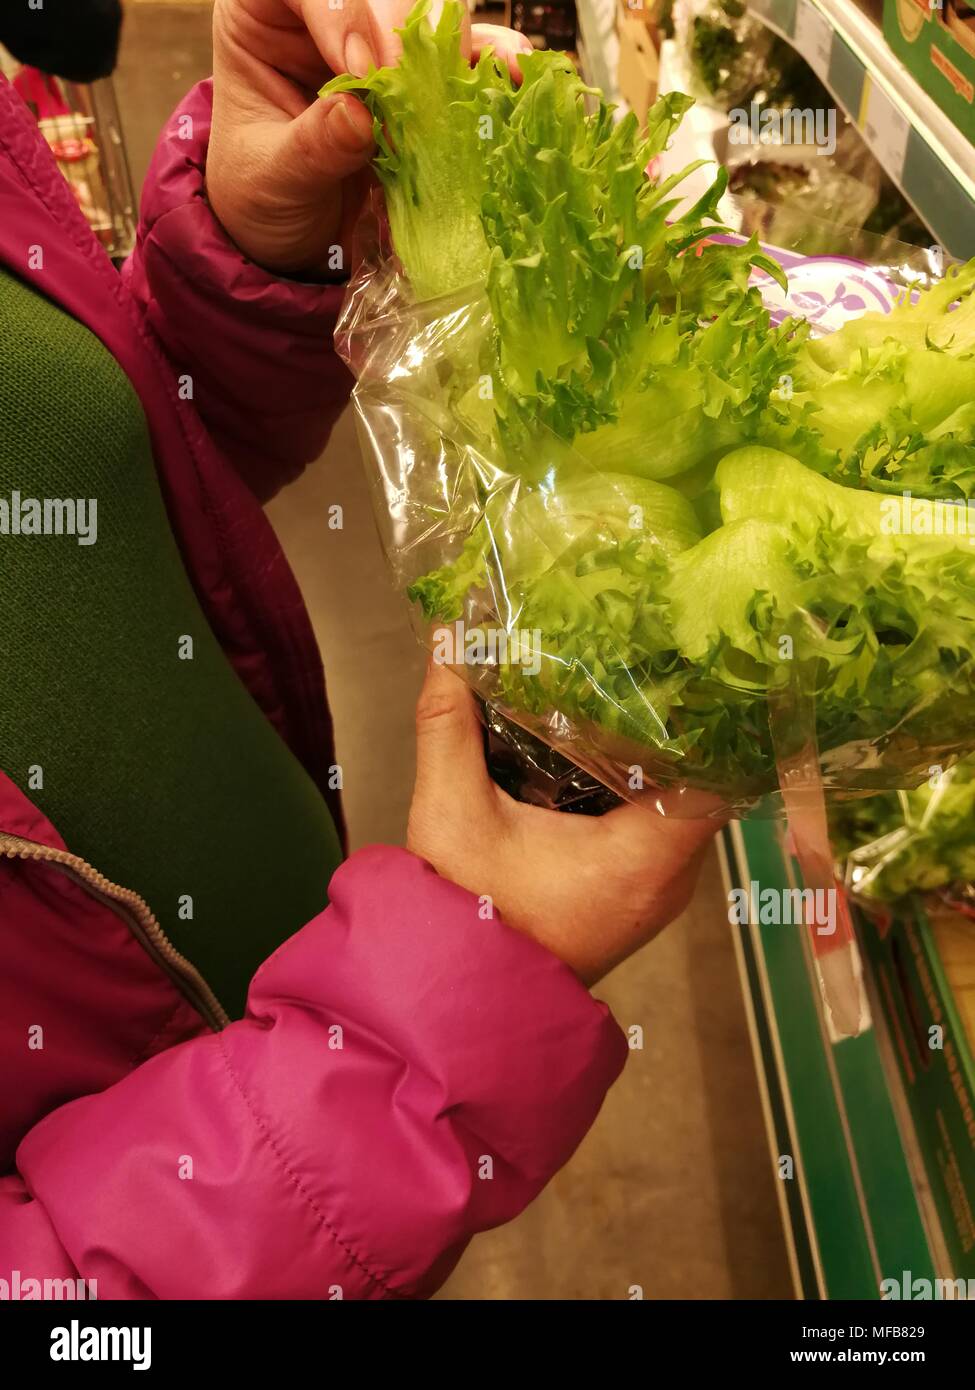 The buyer chooses fresh green lettuce leaves. Stock Photo